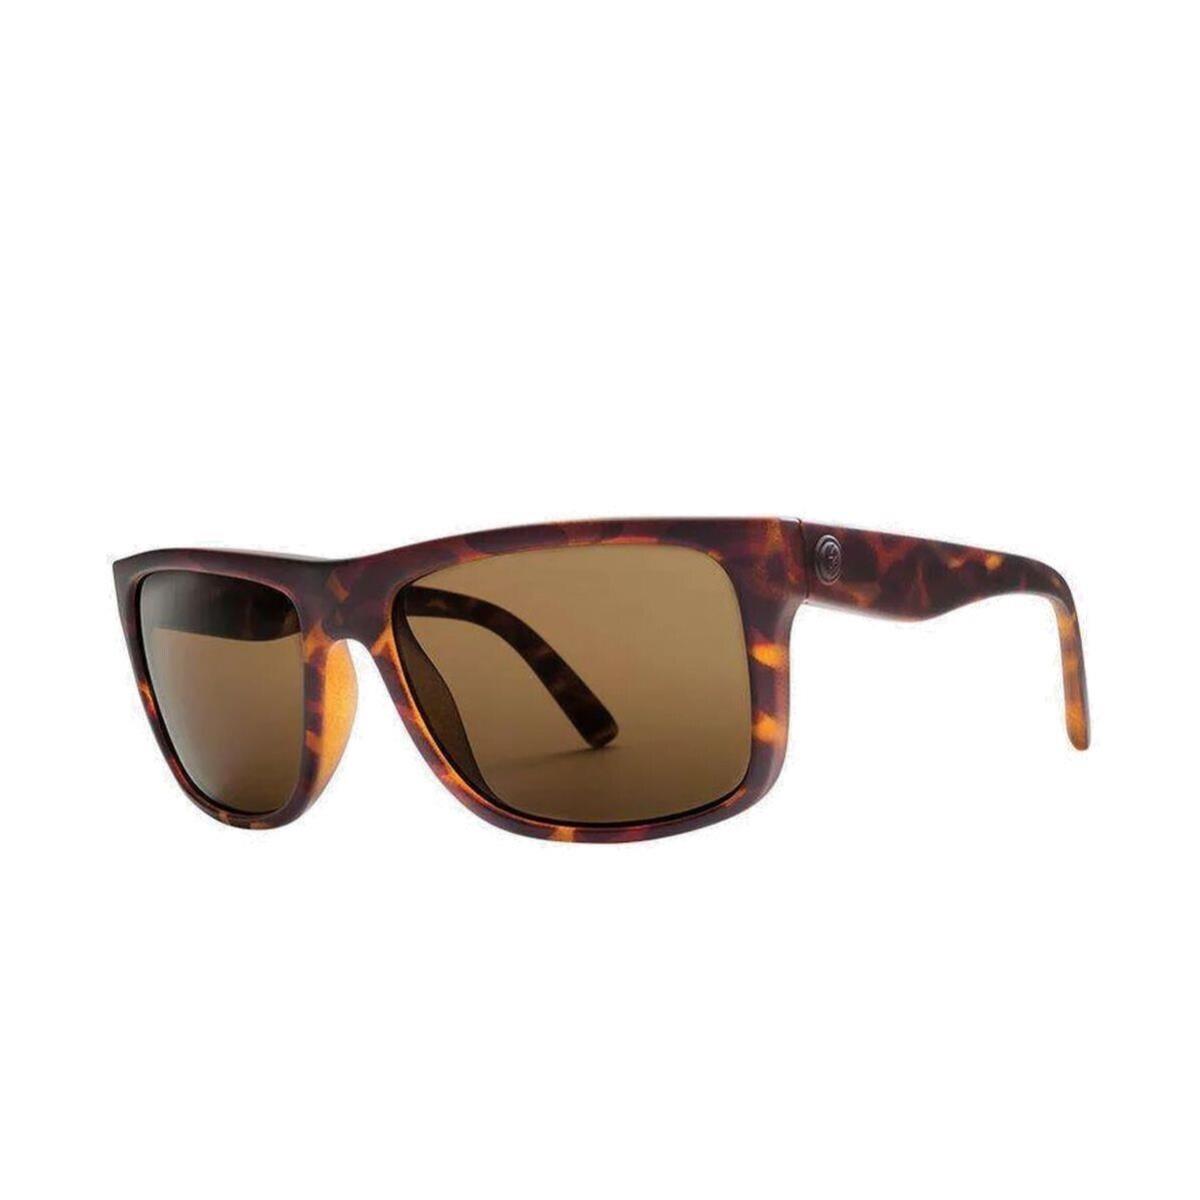 Electric Swingarm XL Sunglasses Matte Tortoise with Bronze Polarized Lens - Frame: , Lens: